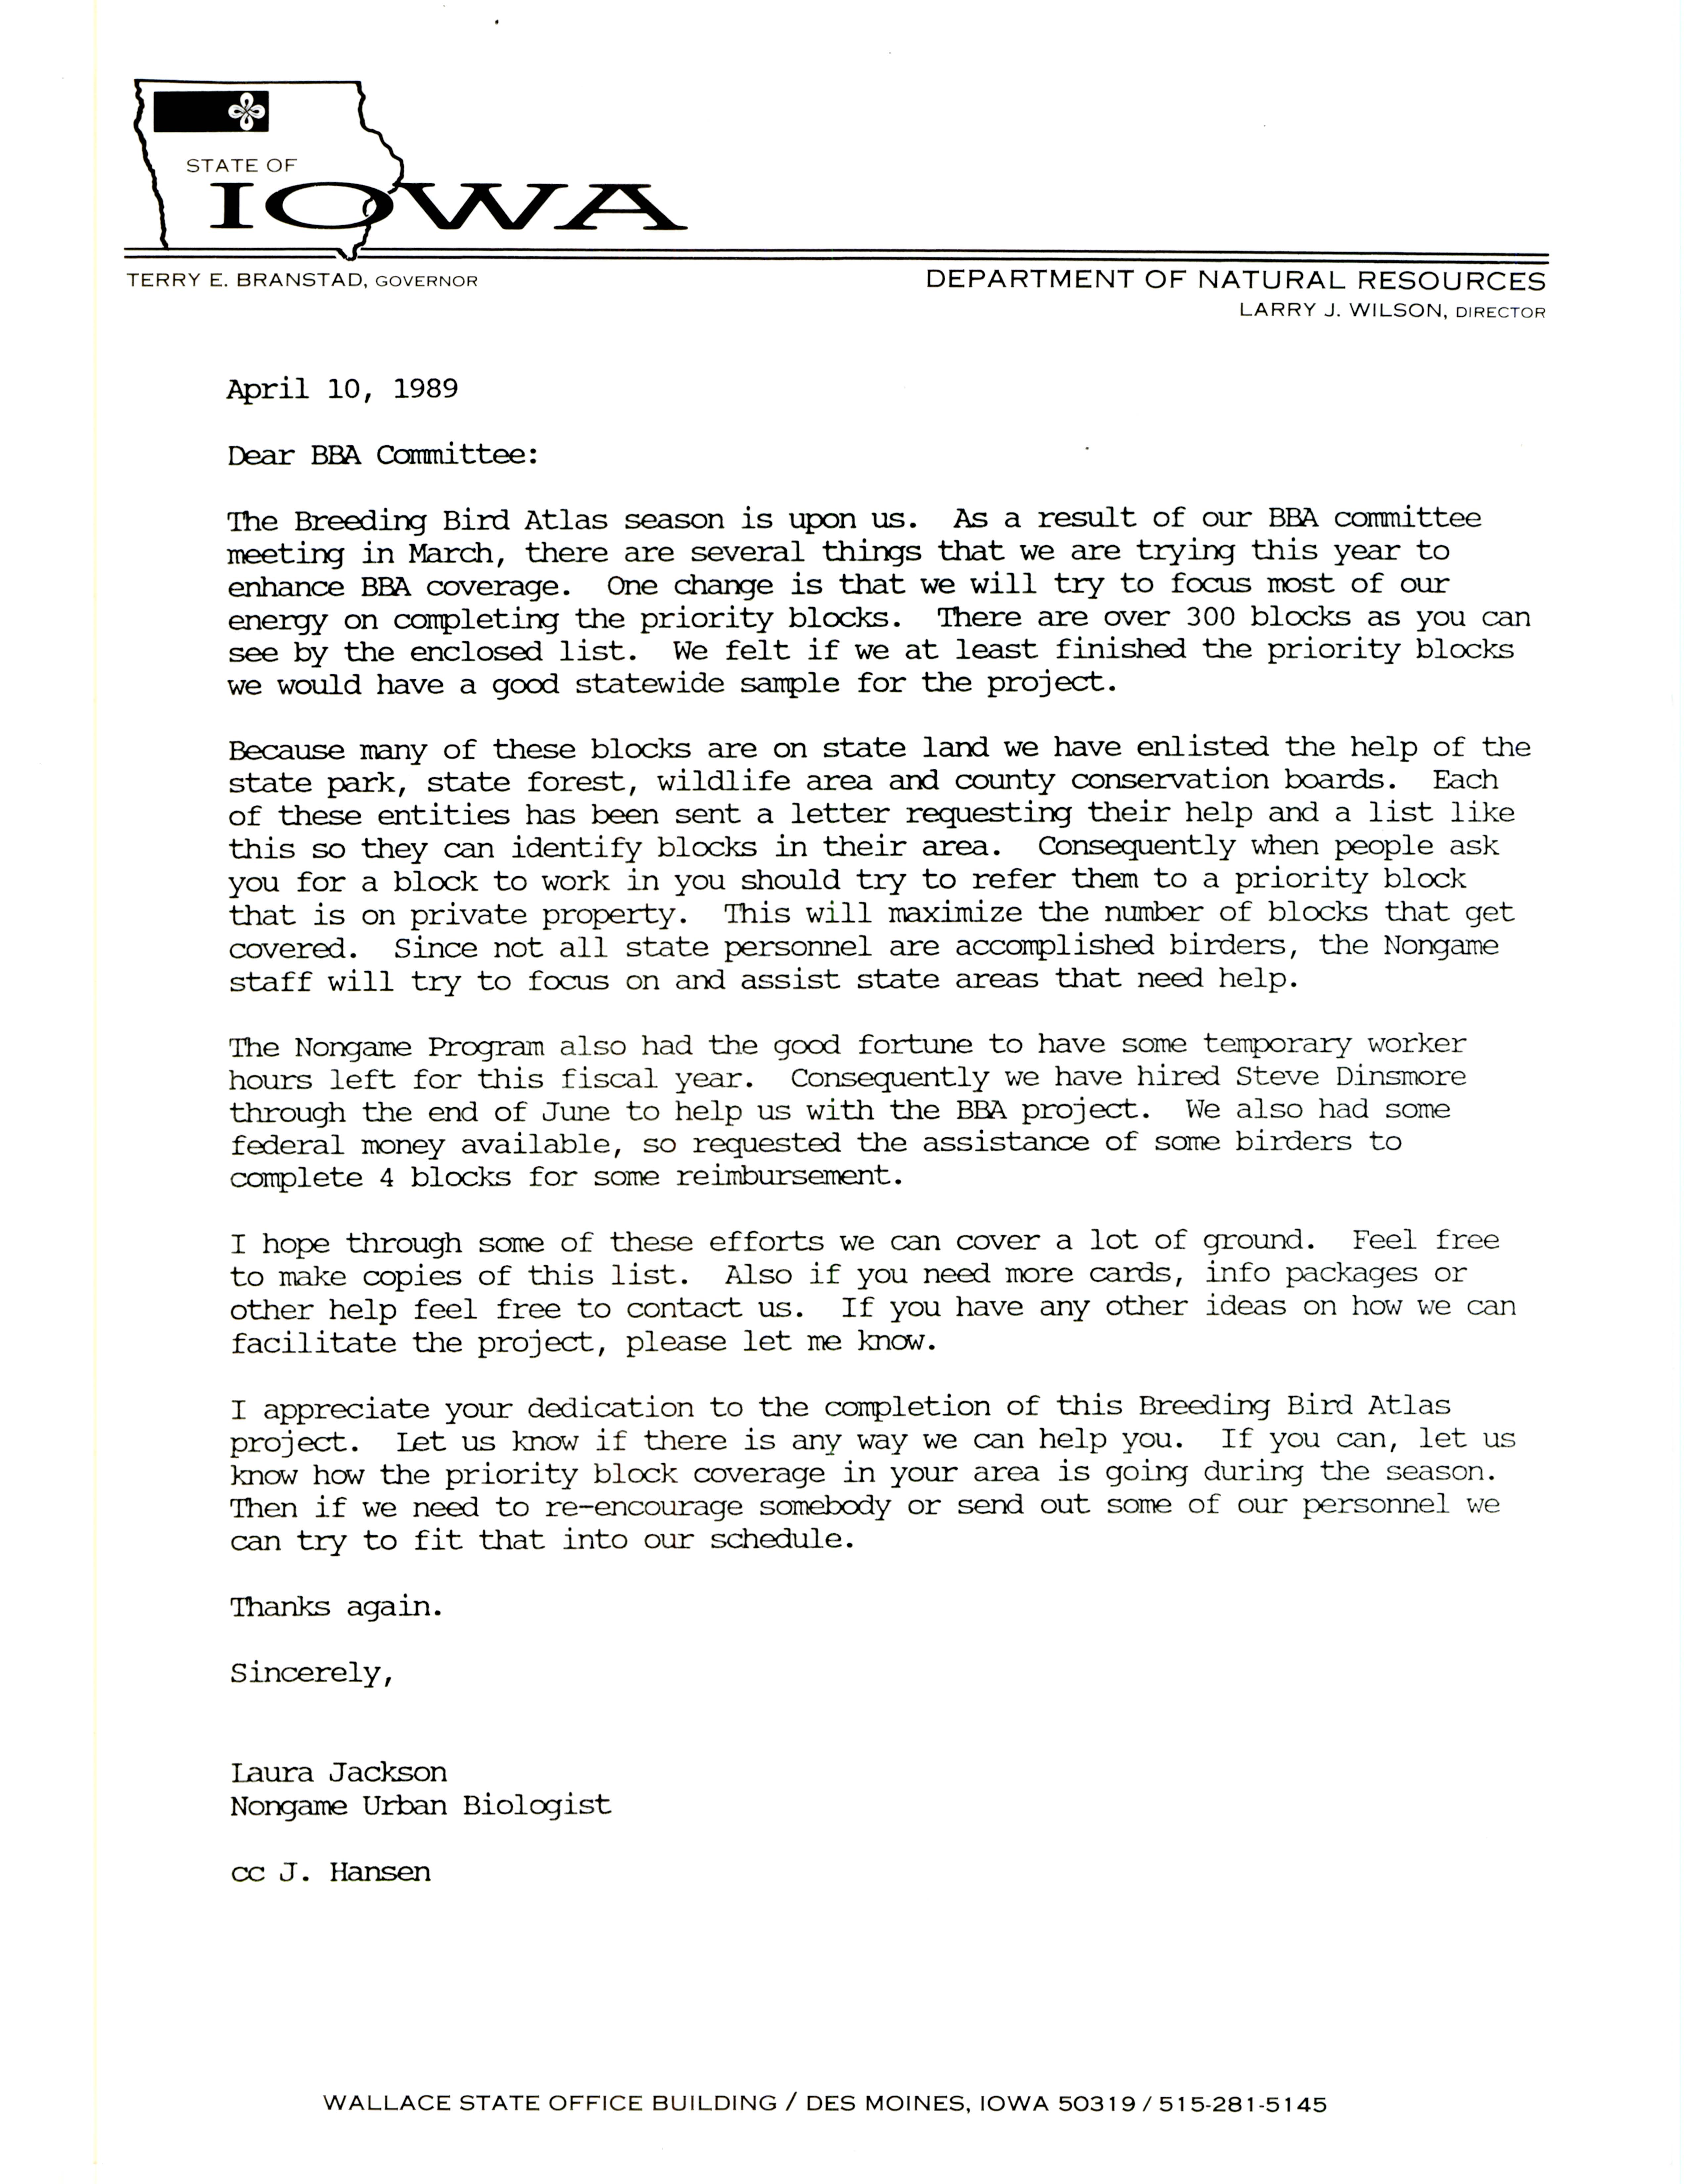 Laura Spess Jackson letter to the Breeding Bird Atlas Committee regarding priority block coverage, April 10, 1989